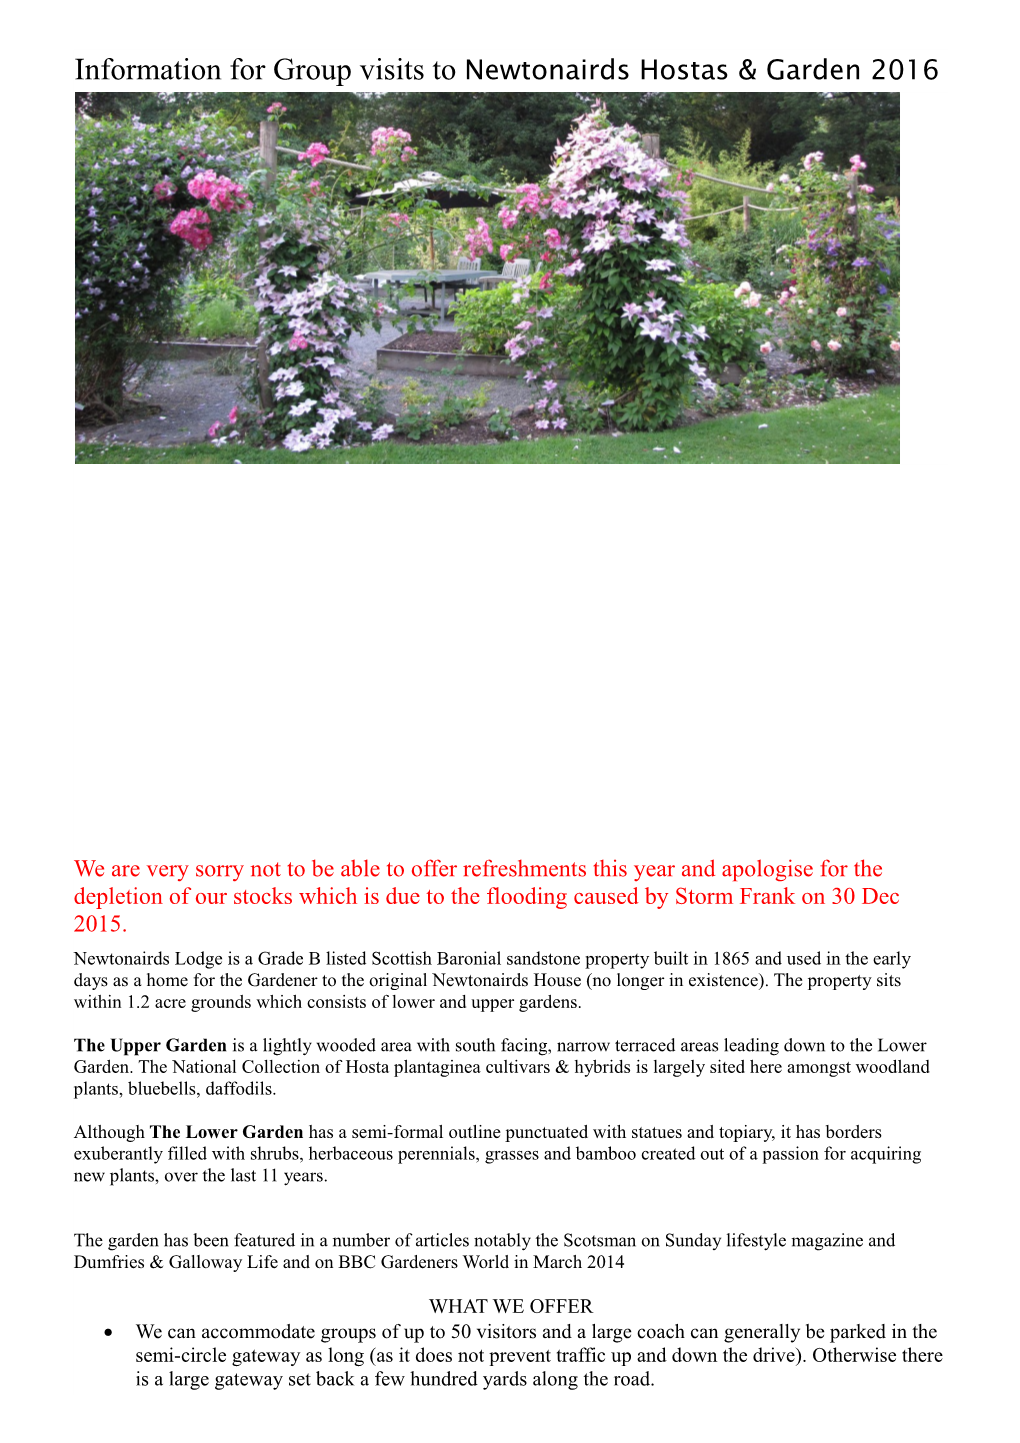 Information for Group Visits to Newtonairds Hostas & Garden 2016